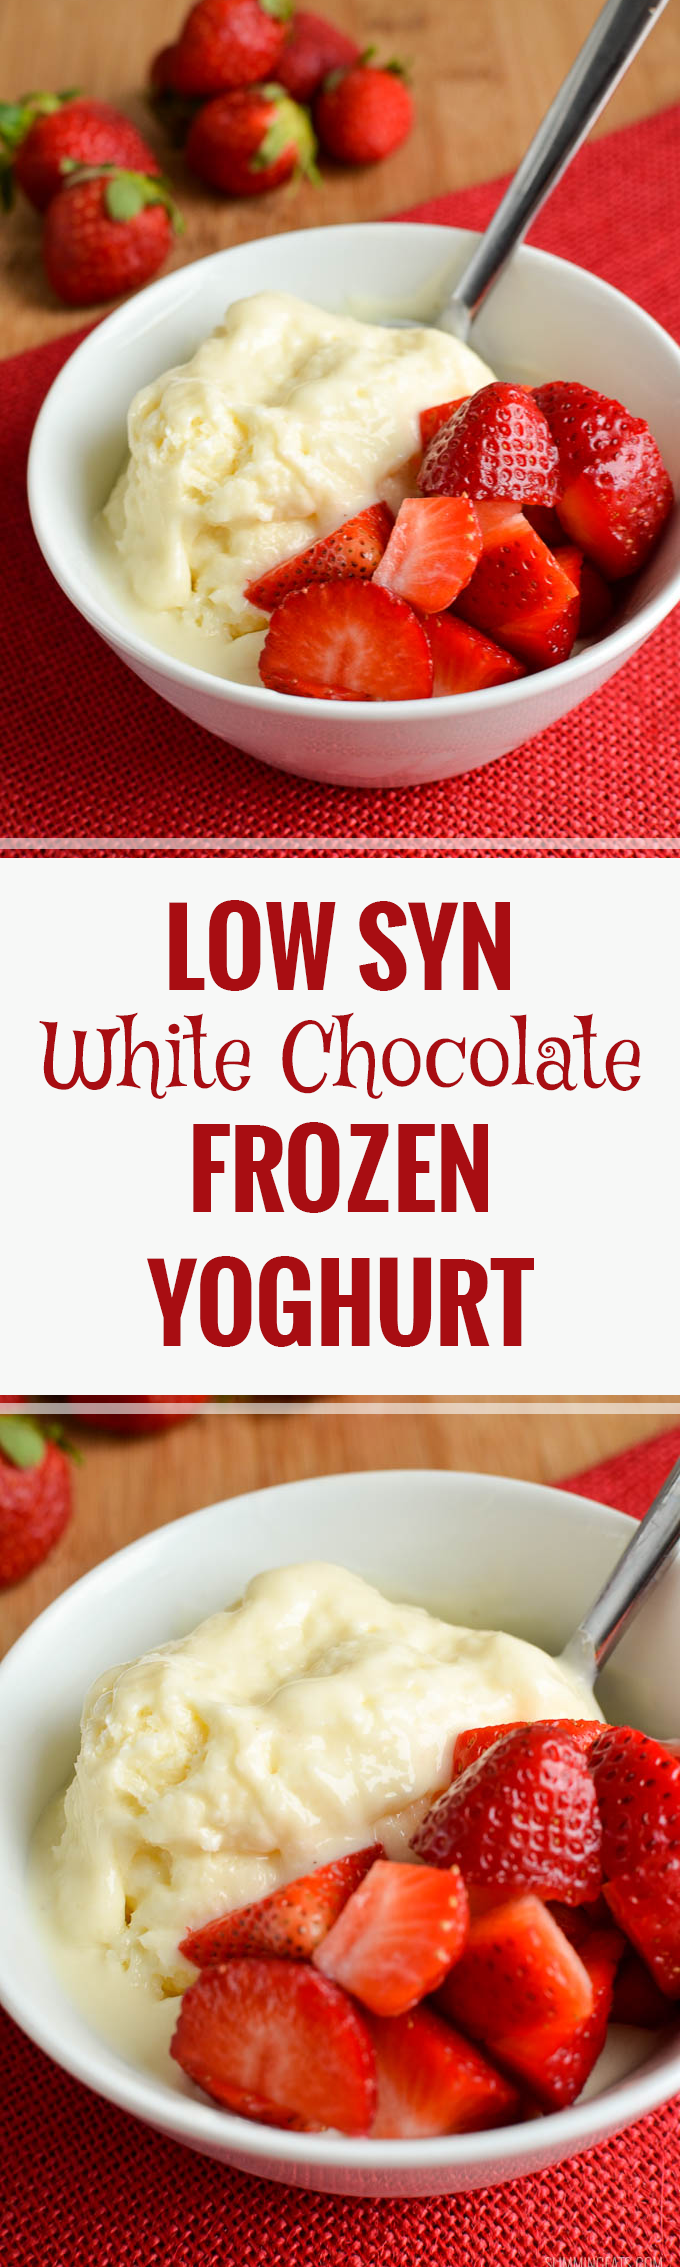 Slimming Eats Low Syn White Chocolate Frozen Yoghurt - Gluten Free, Vegetarian, Slimming World and Weight Watchers friendly